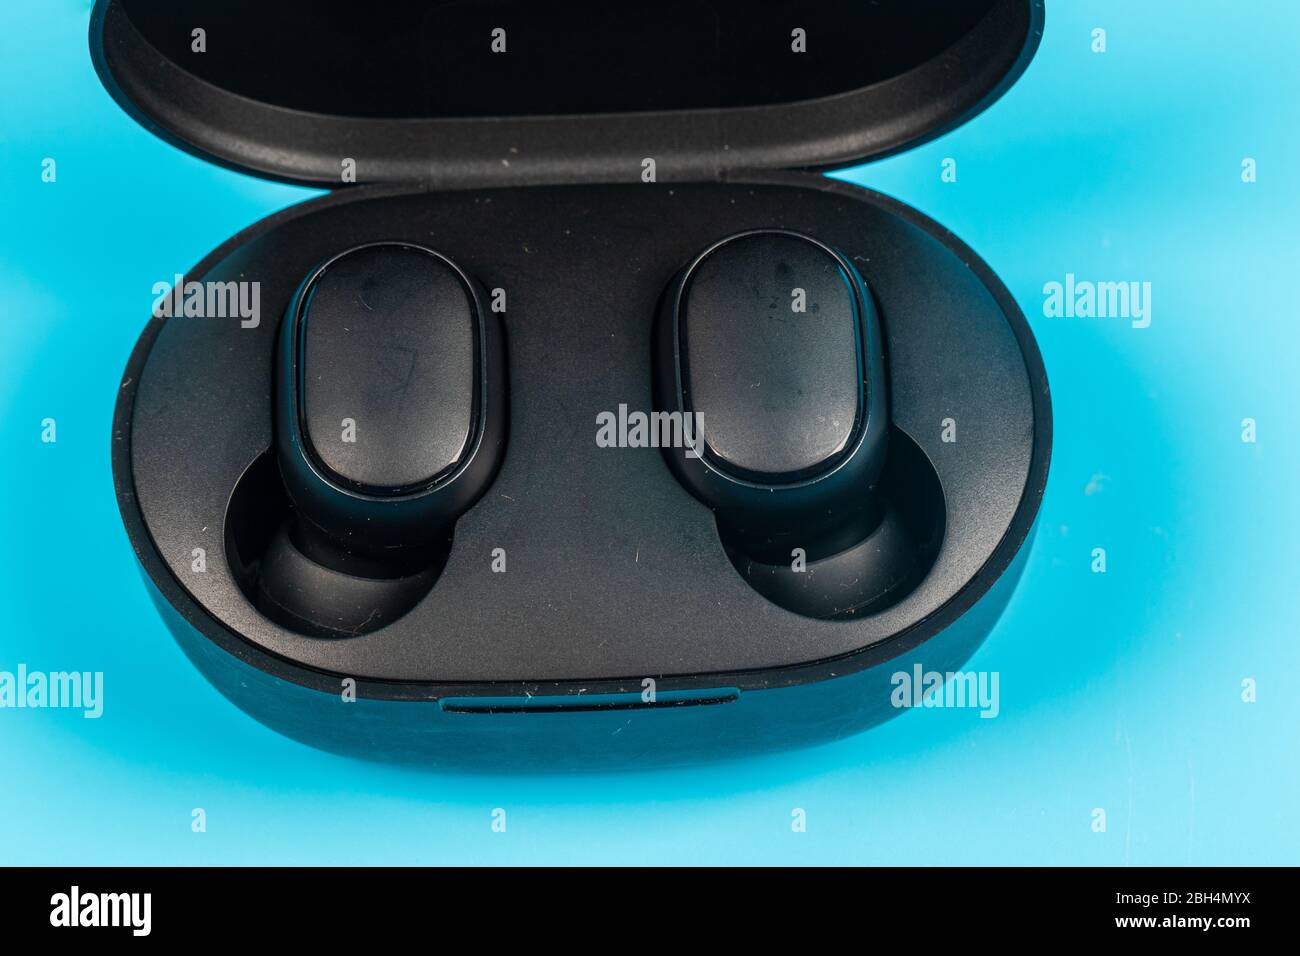 Wireless bluetooth headphones isolated on blue background Stock Photo